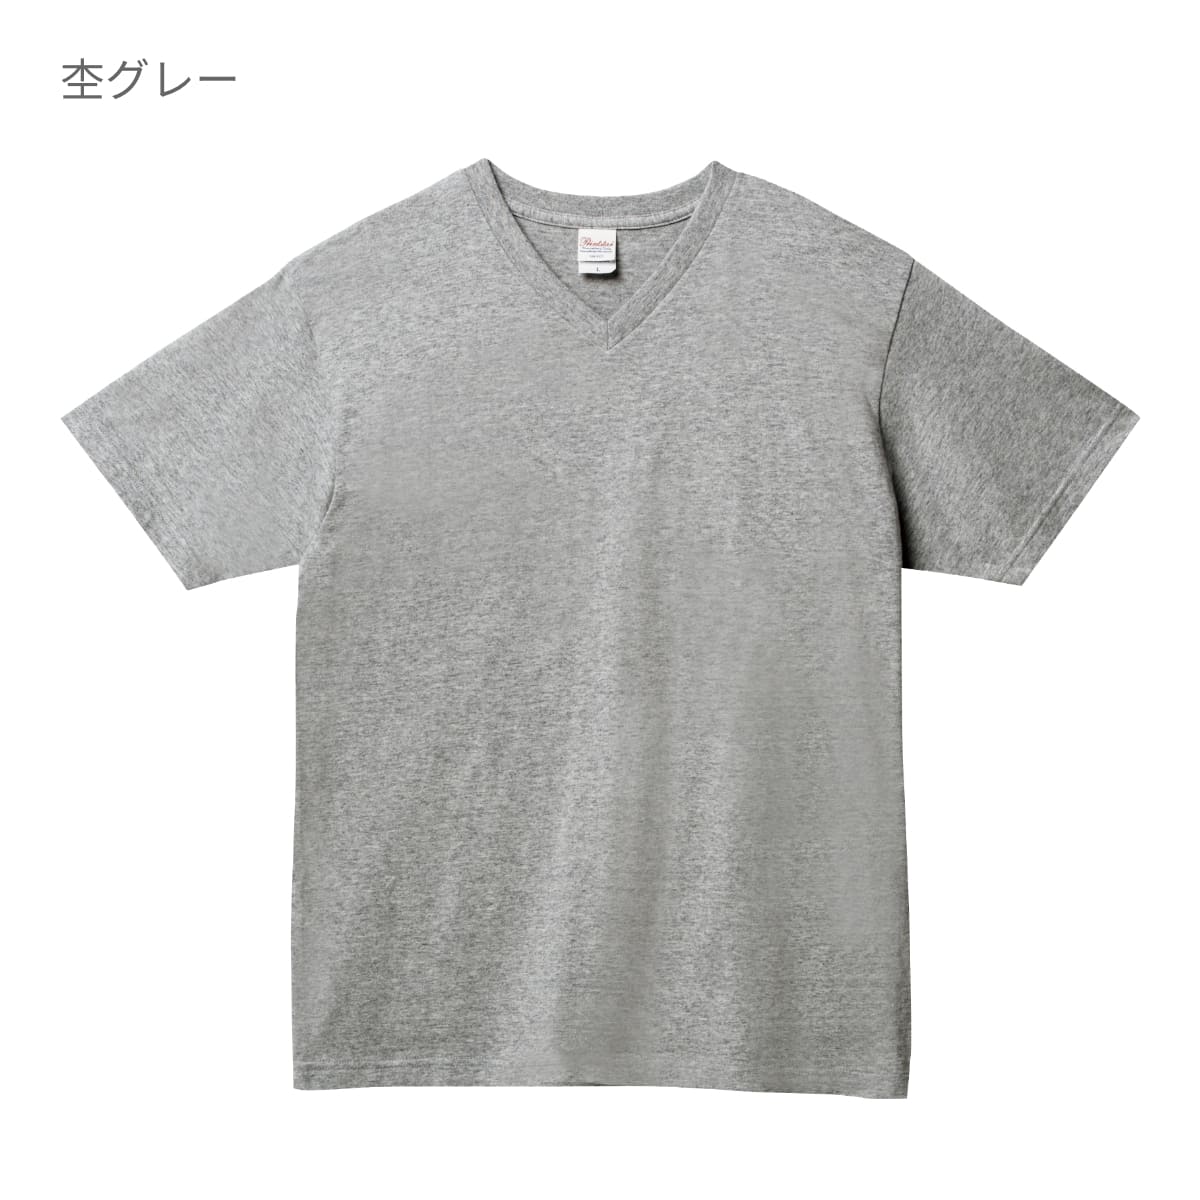 【Dior】Tシャツ/グレー/Vネック